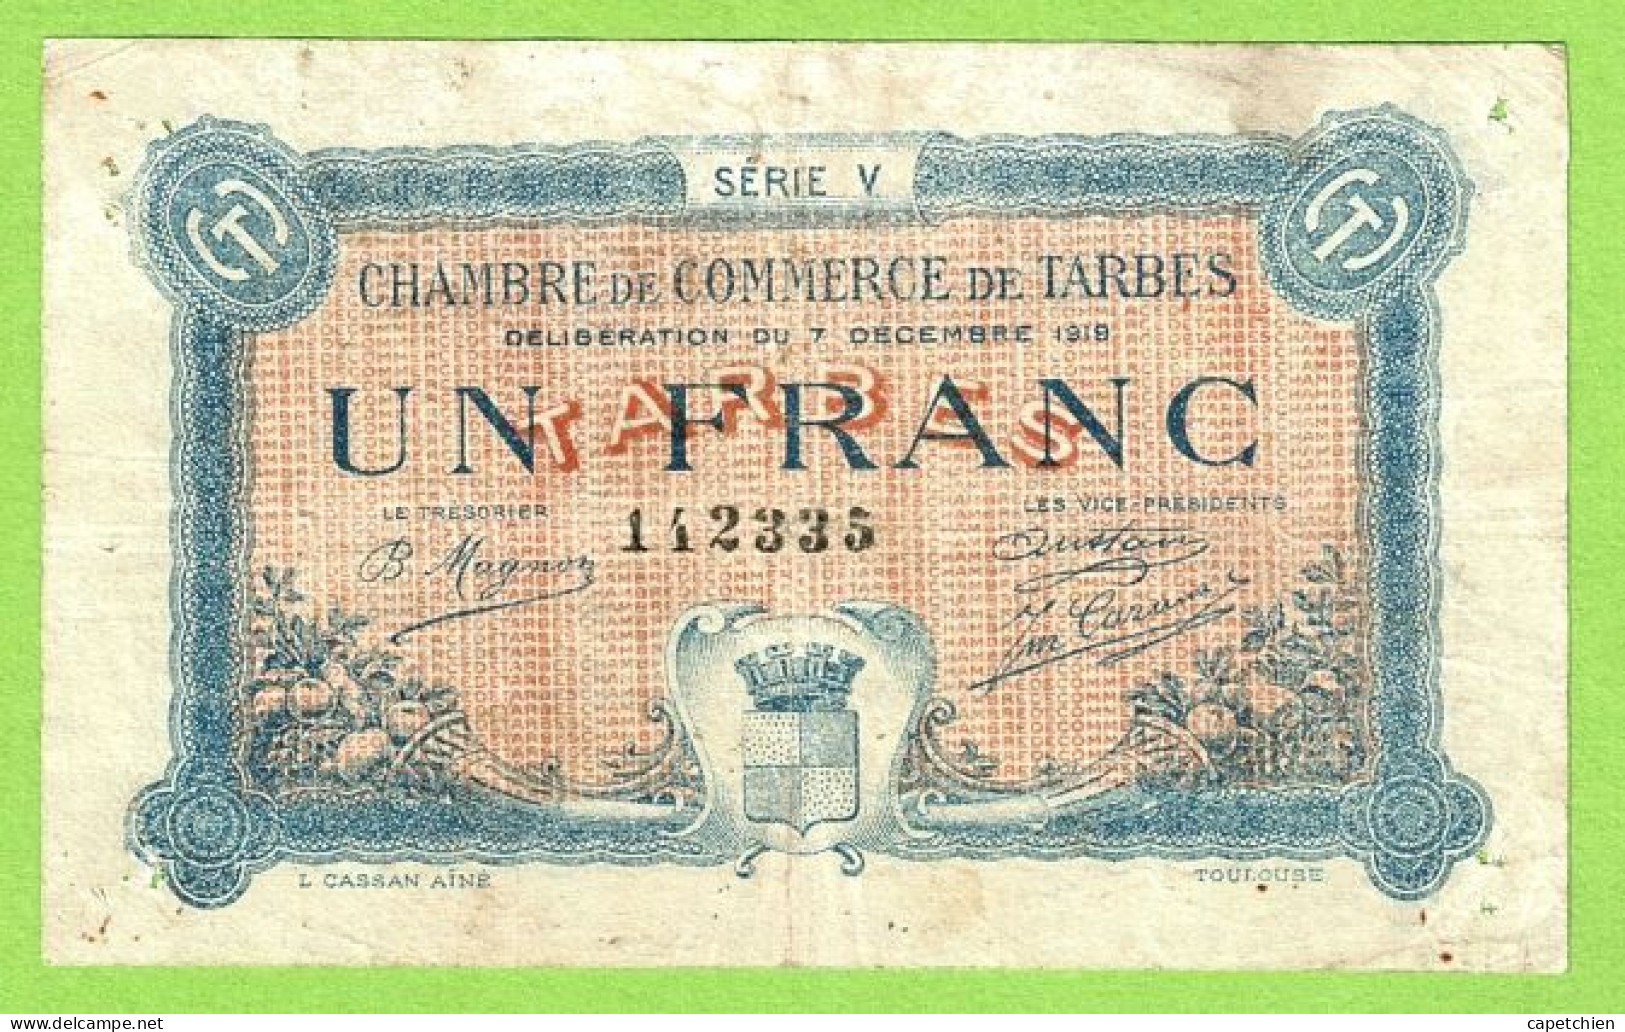 FRANCE / CHAMBRE De COMMERCE / TARBES / 1 FRANC / 7 DECEMBRE 1918 / 142335 / SERIE V - Chamber Of Commerce